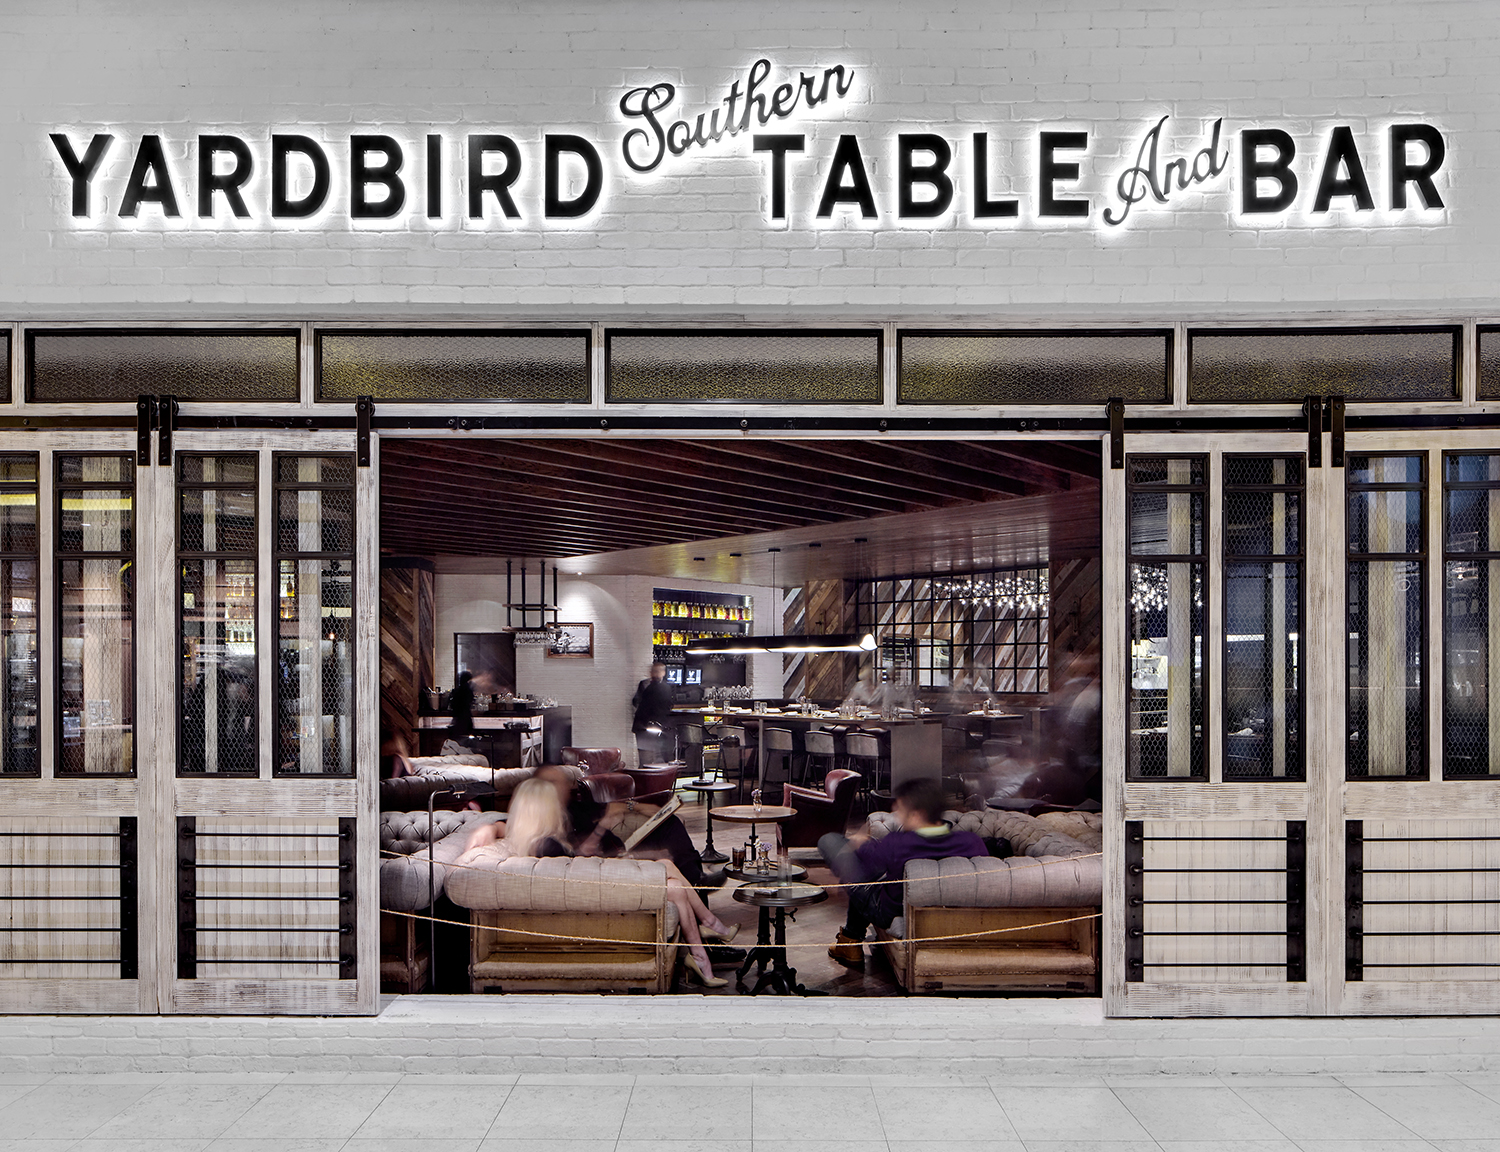 Yardbird Southern Table Bar Restaurant